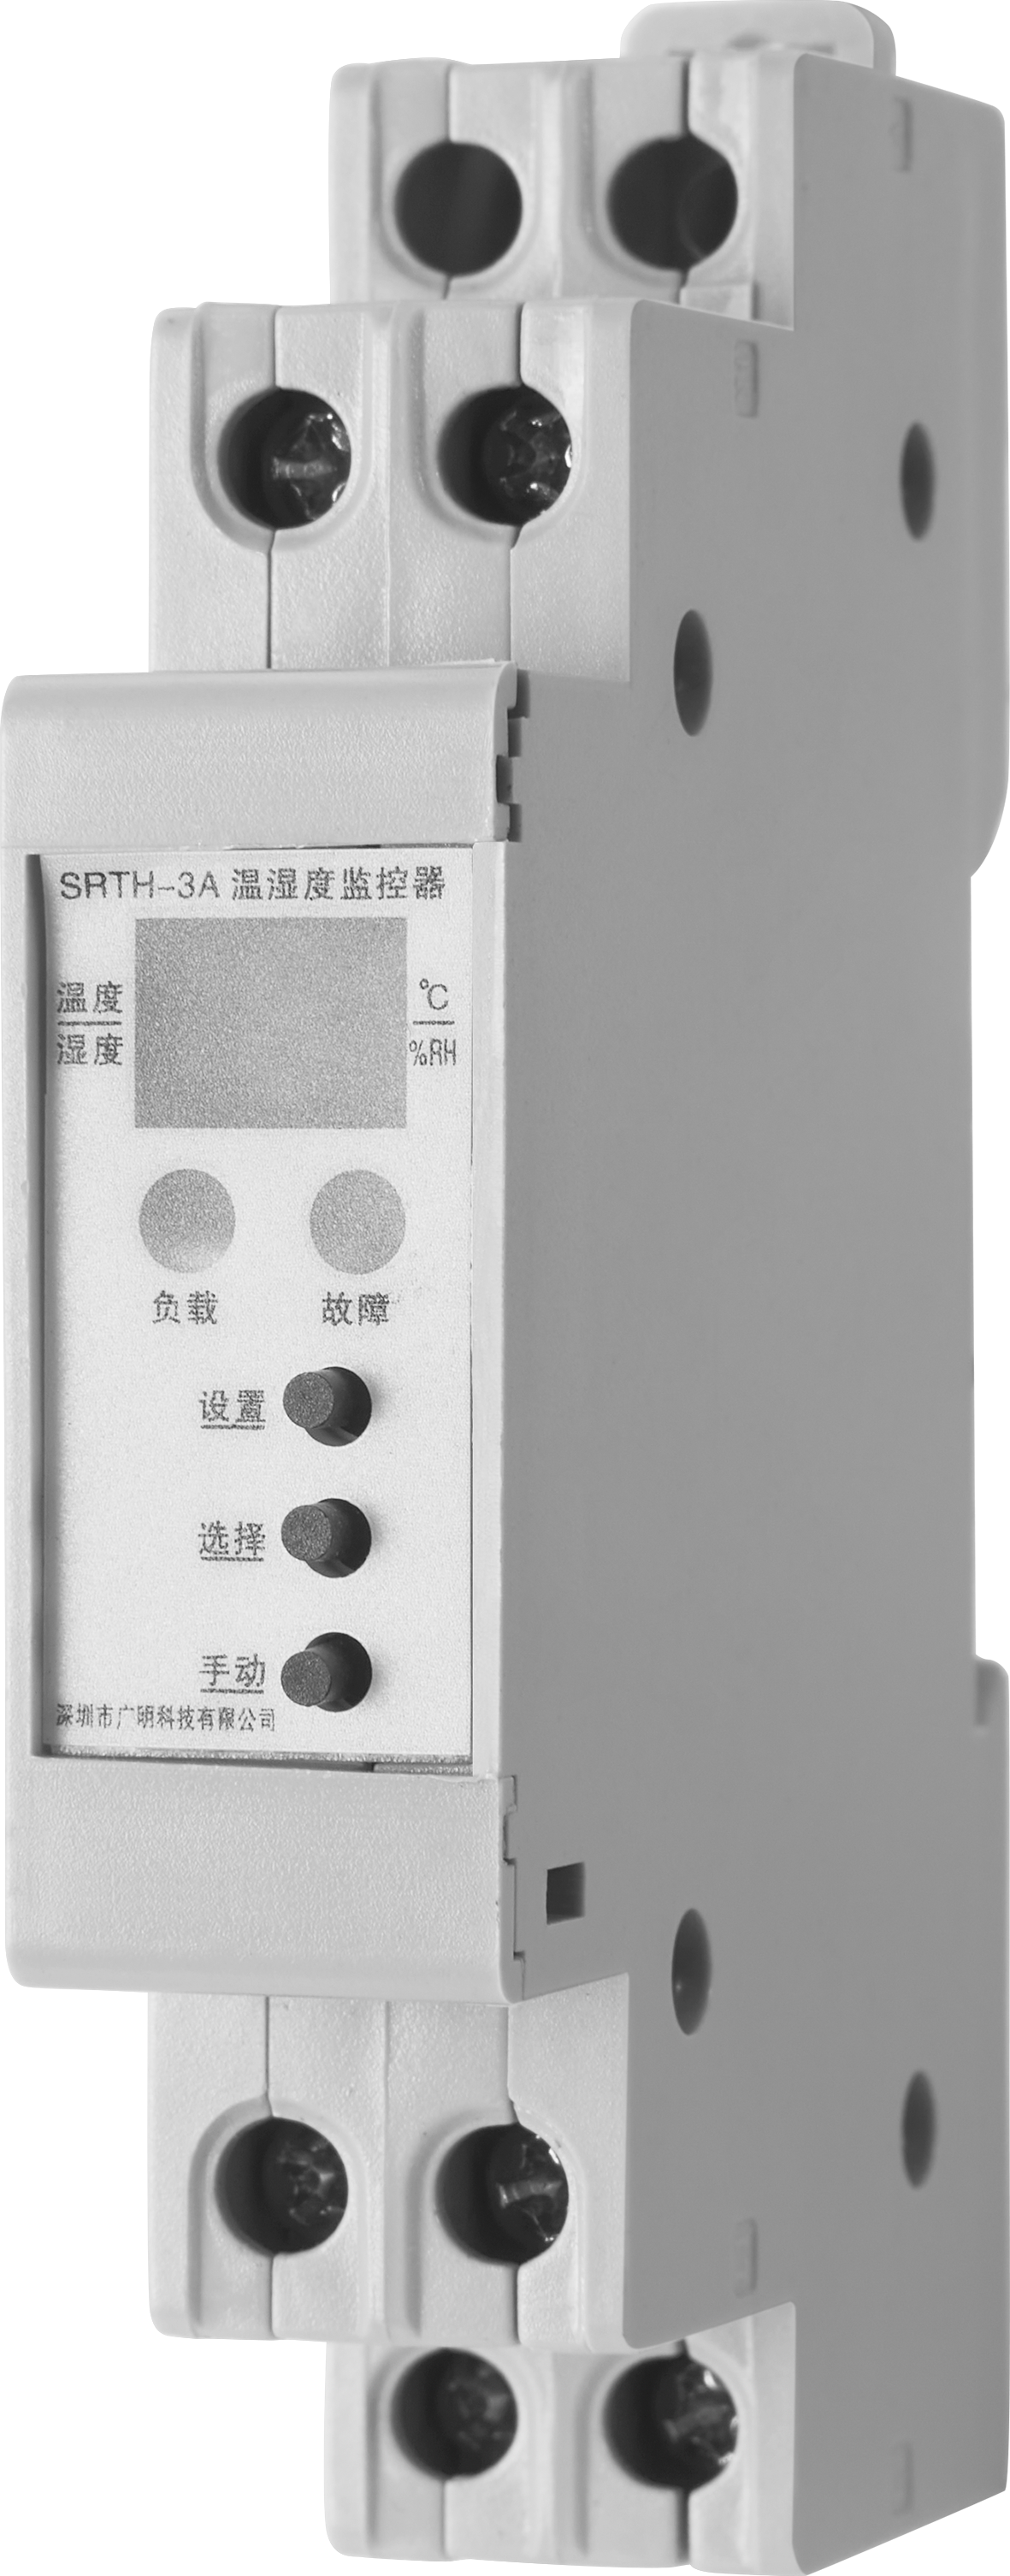 SRTH3A温湿度监控装置.png